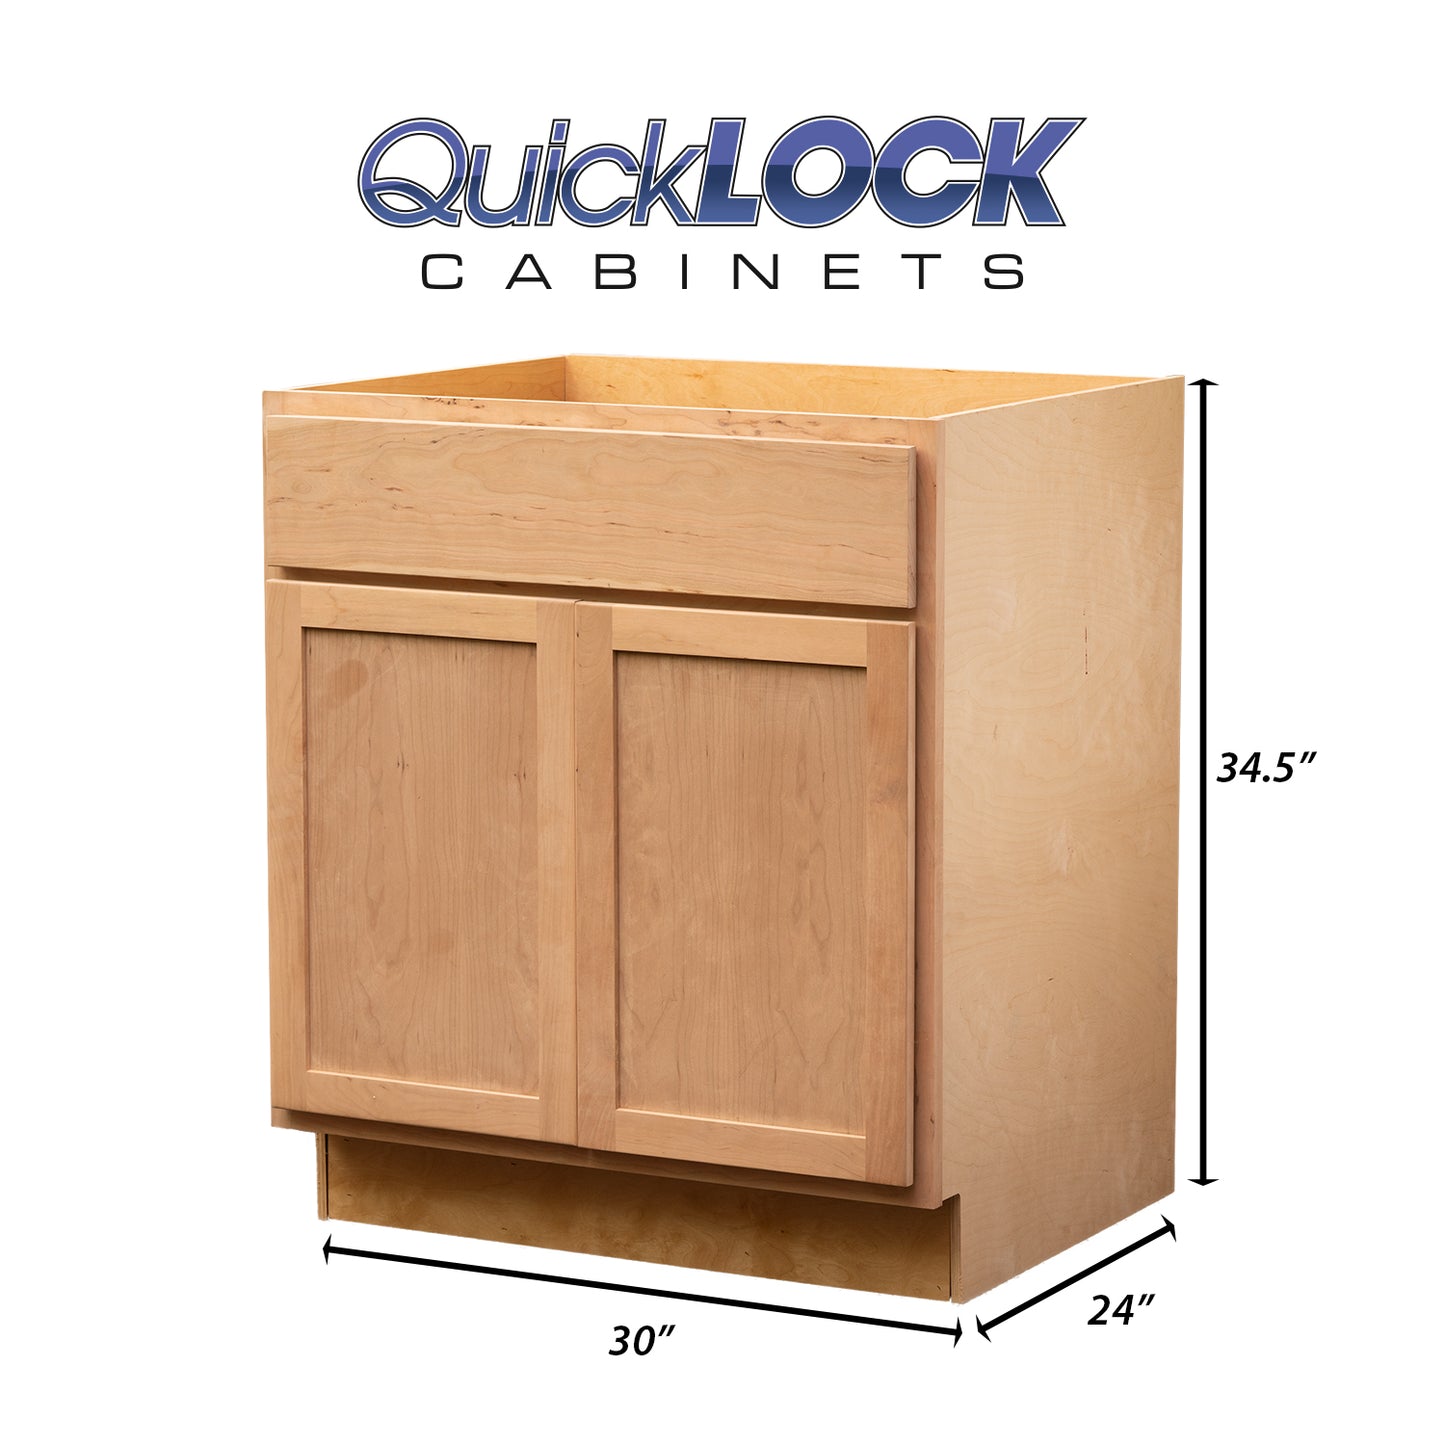 Quicklock RTA (Ready-to-Assemble) Raw Cherry Base Cabinet | 30"Wx34.5"Hx24"D